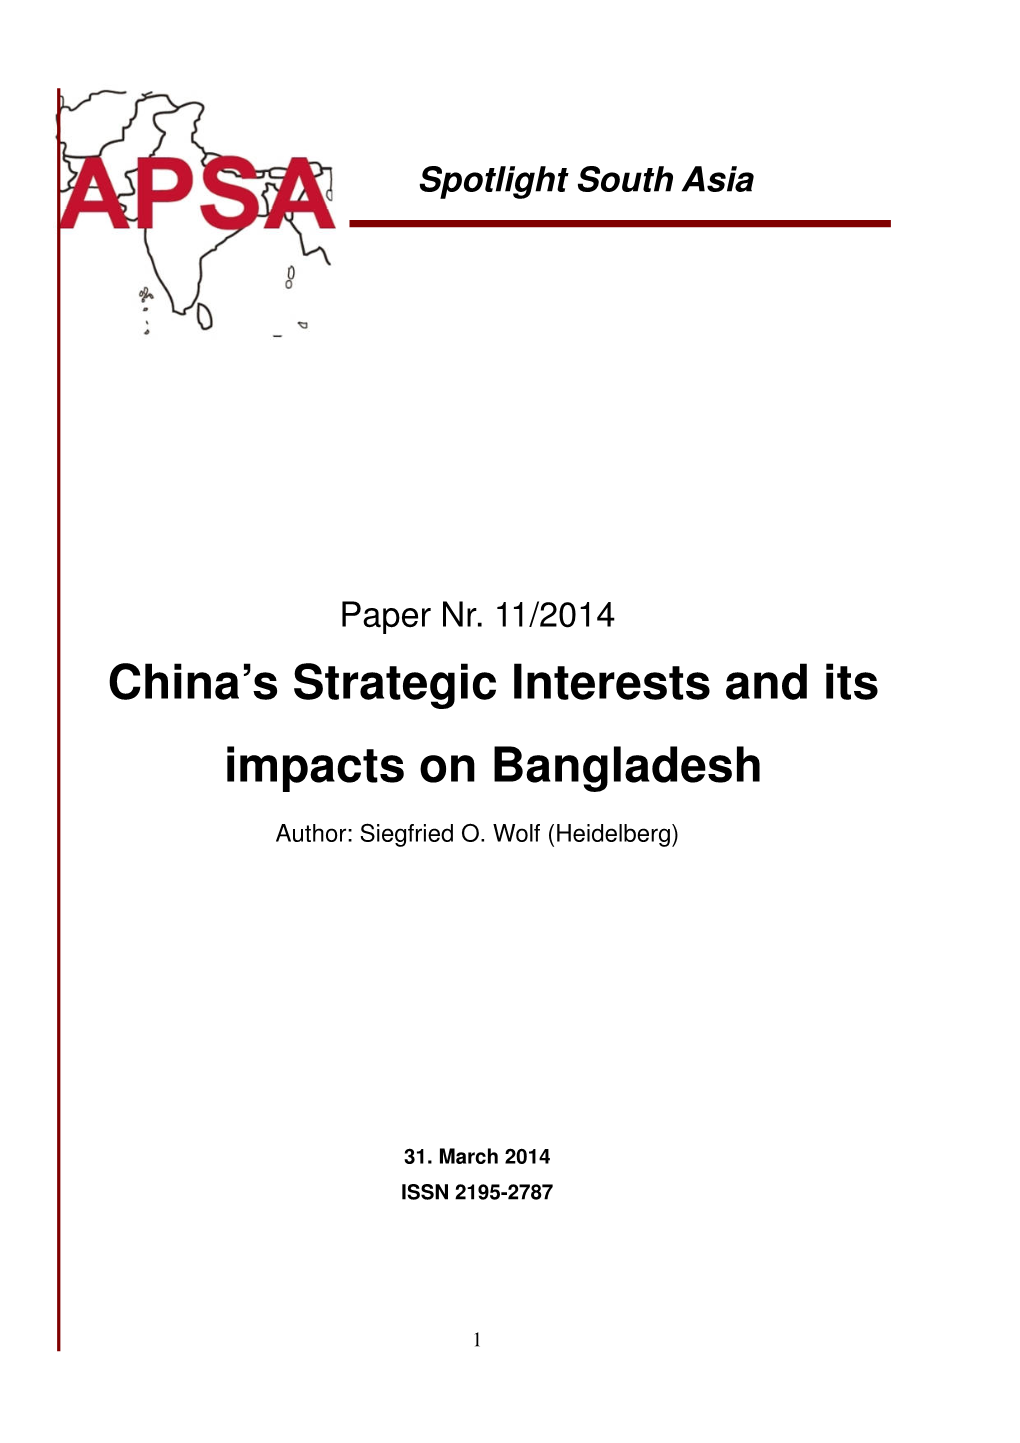 China's Strategic Interests and Its Impacts on Bangladesh